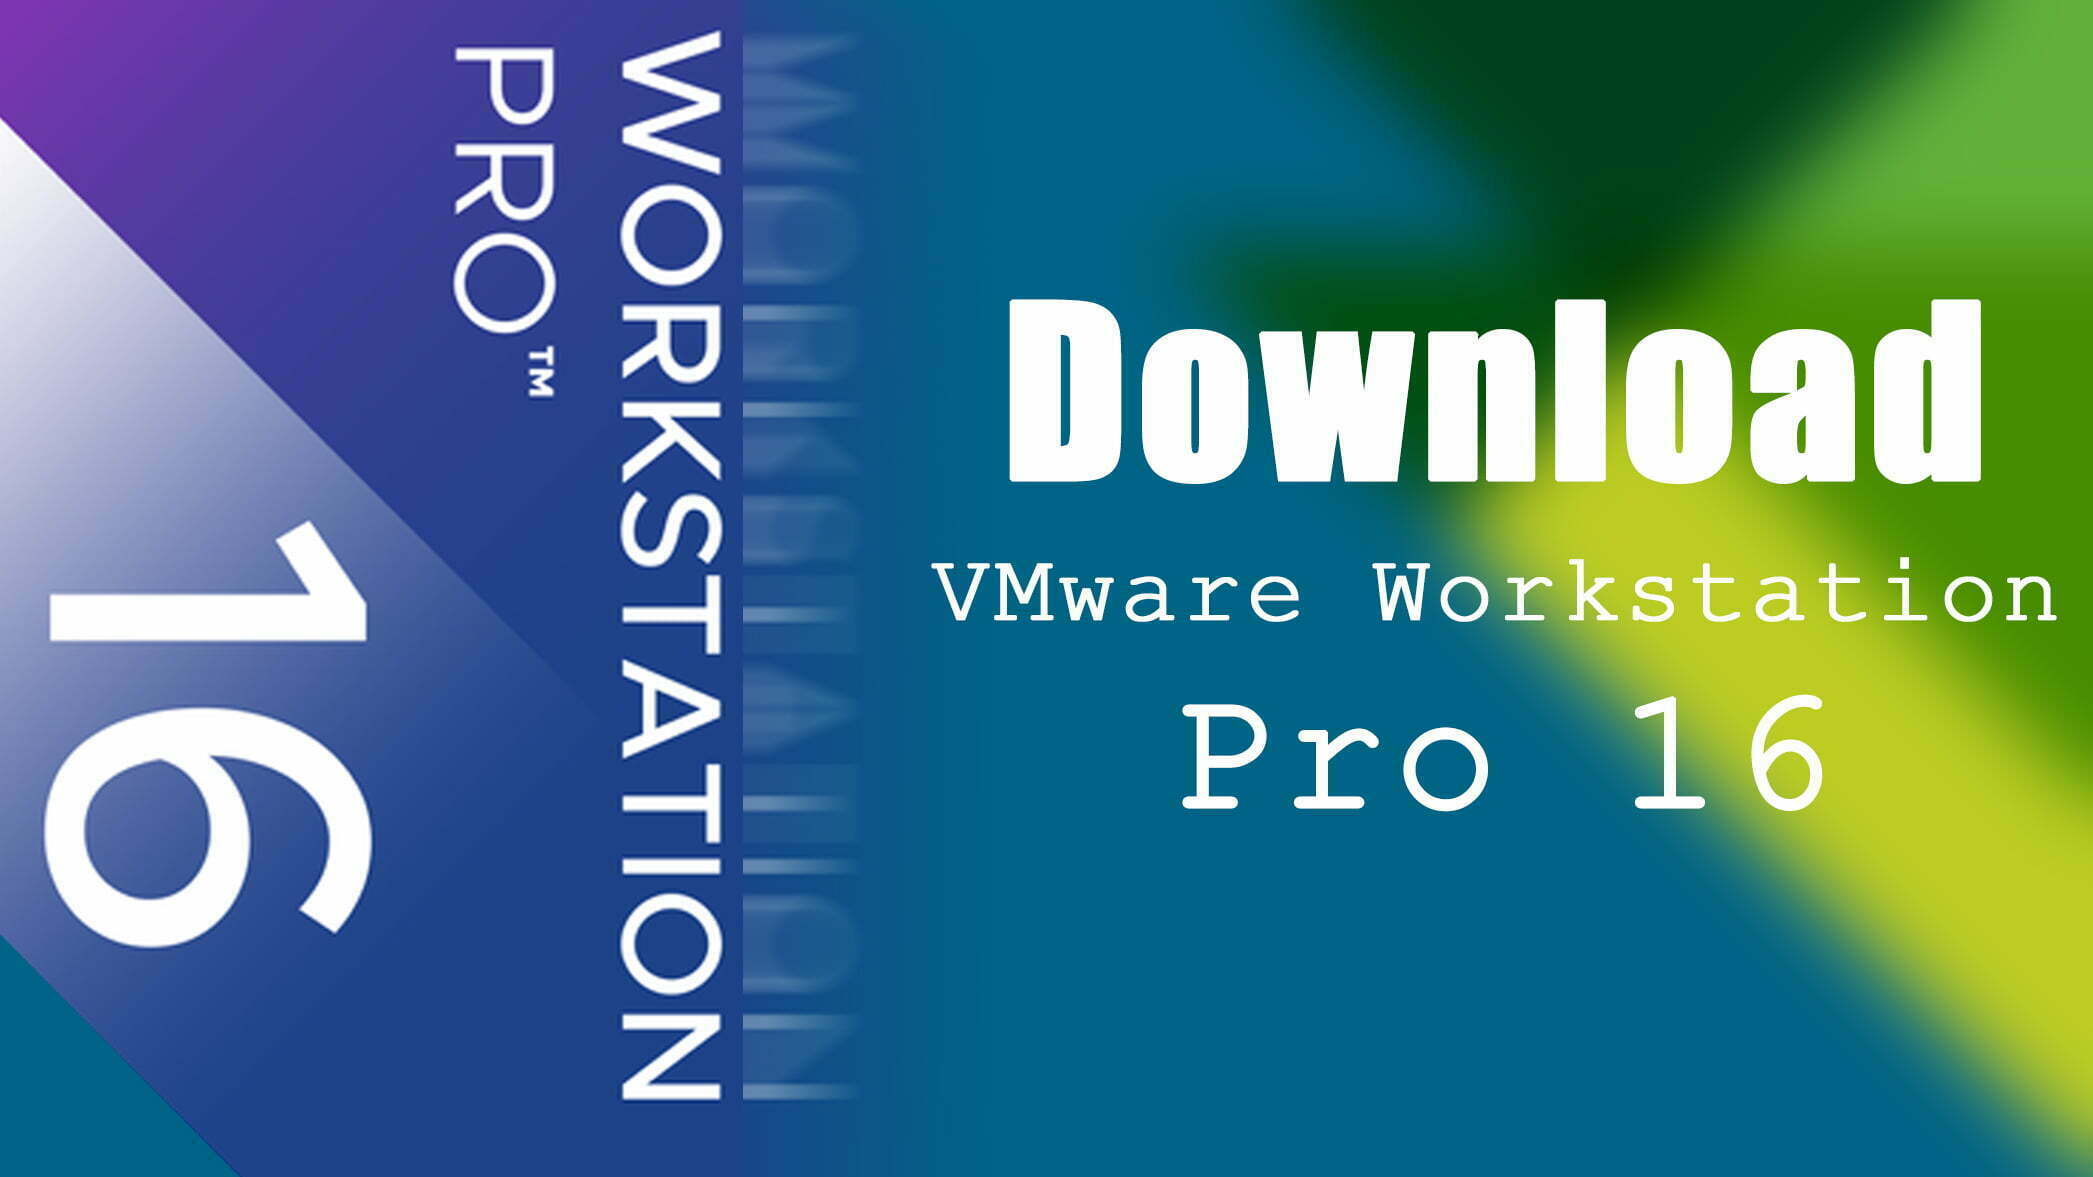 vmware workstation 16 pro download for windows